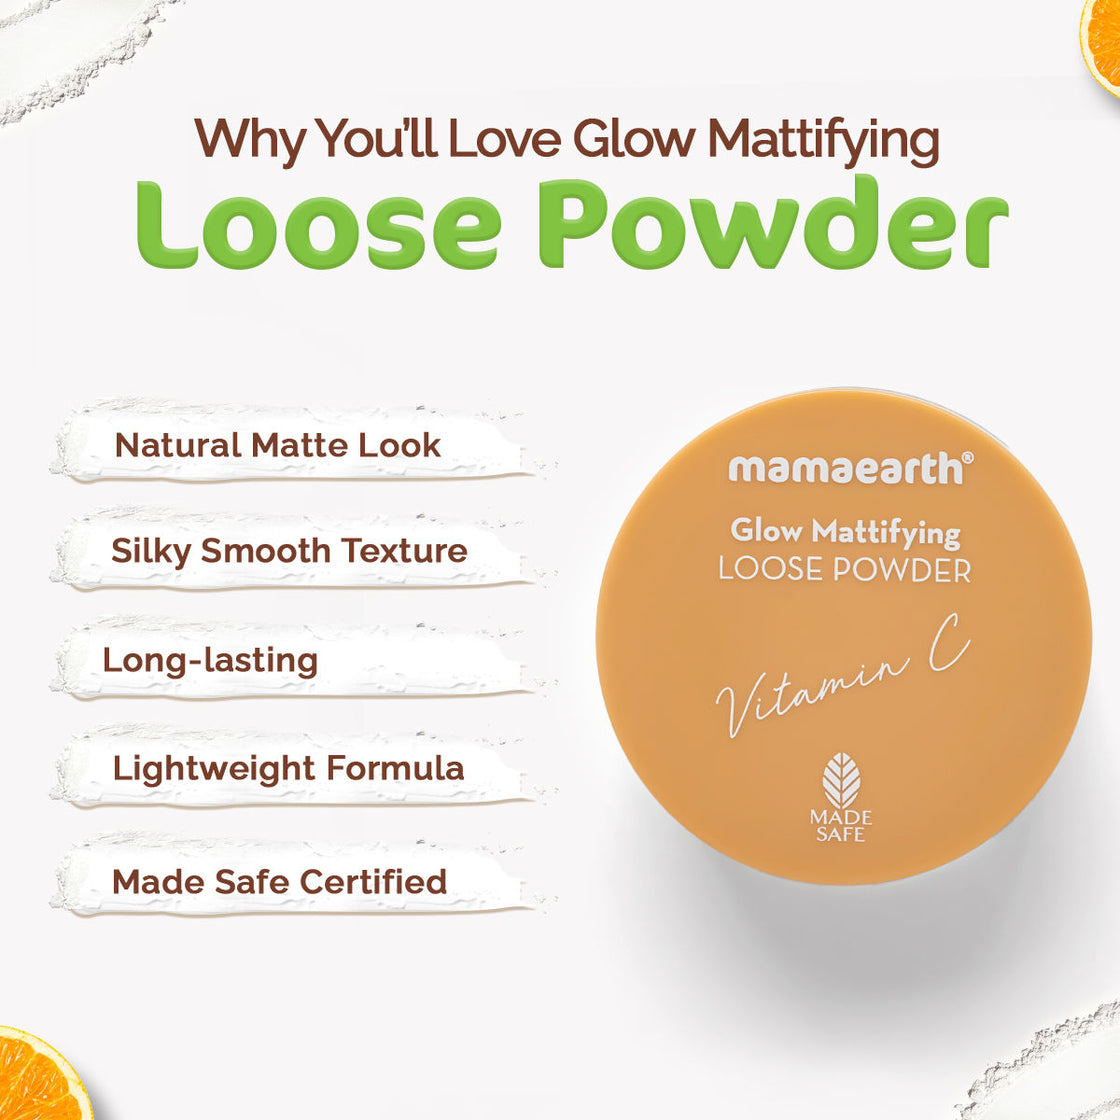 Mamaearth Glow Mattifying Loose Powder With Vitamin C & Aloe Vera For A Natural Matte Look-4